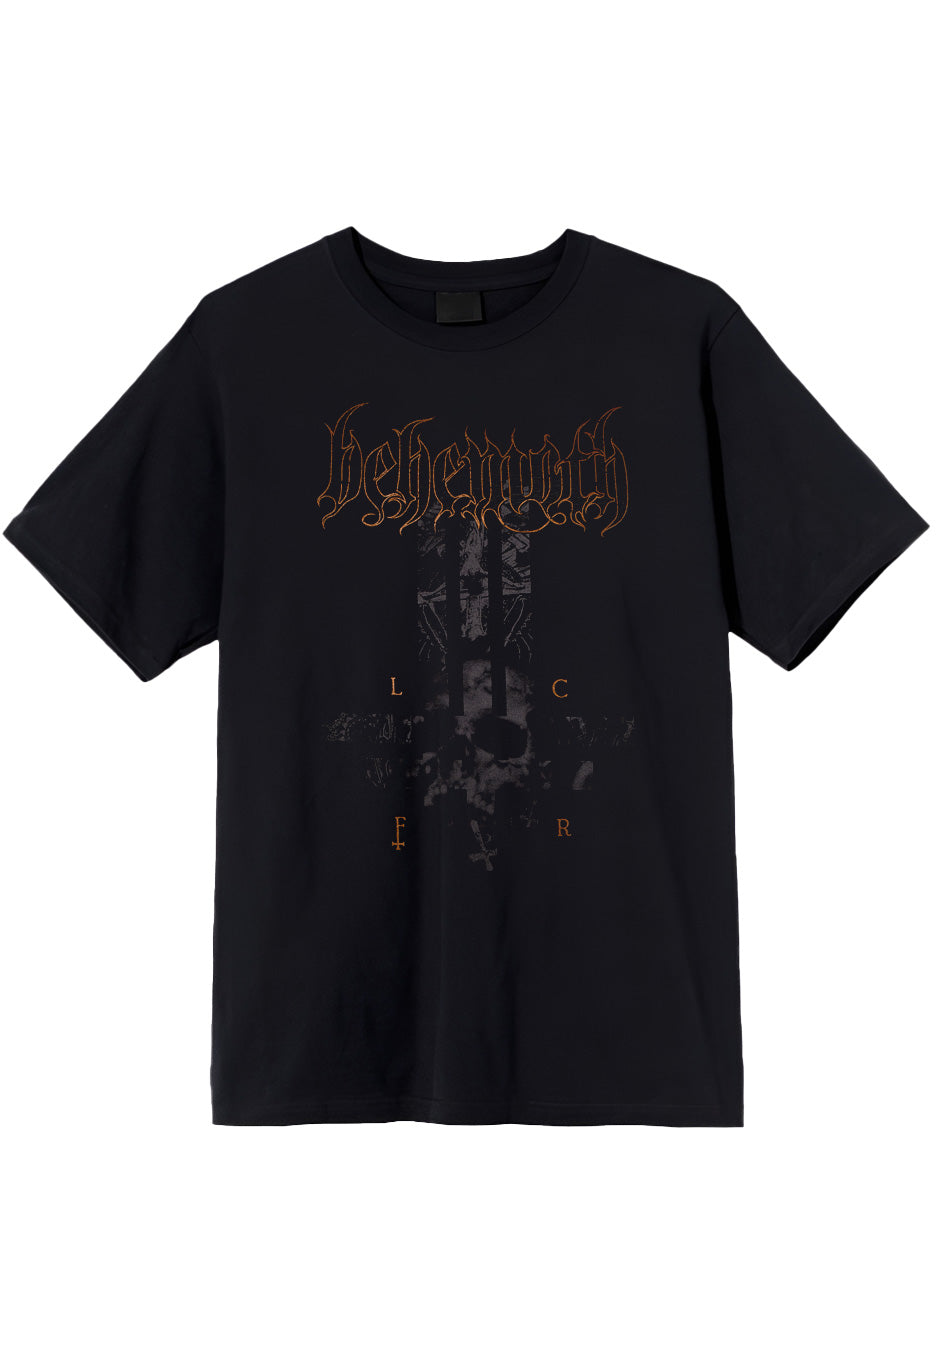 Behemoth - LCFR Cross - T-Shirt